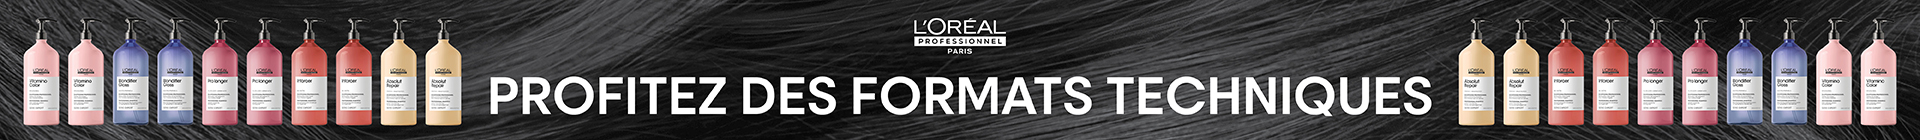 cat-banner-lp-po-backbar | L'Oréal Partner Shop